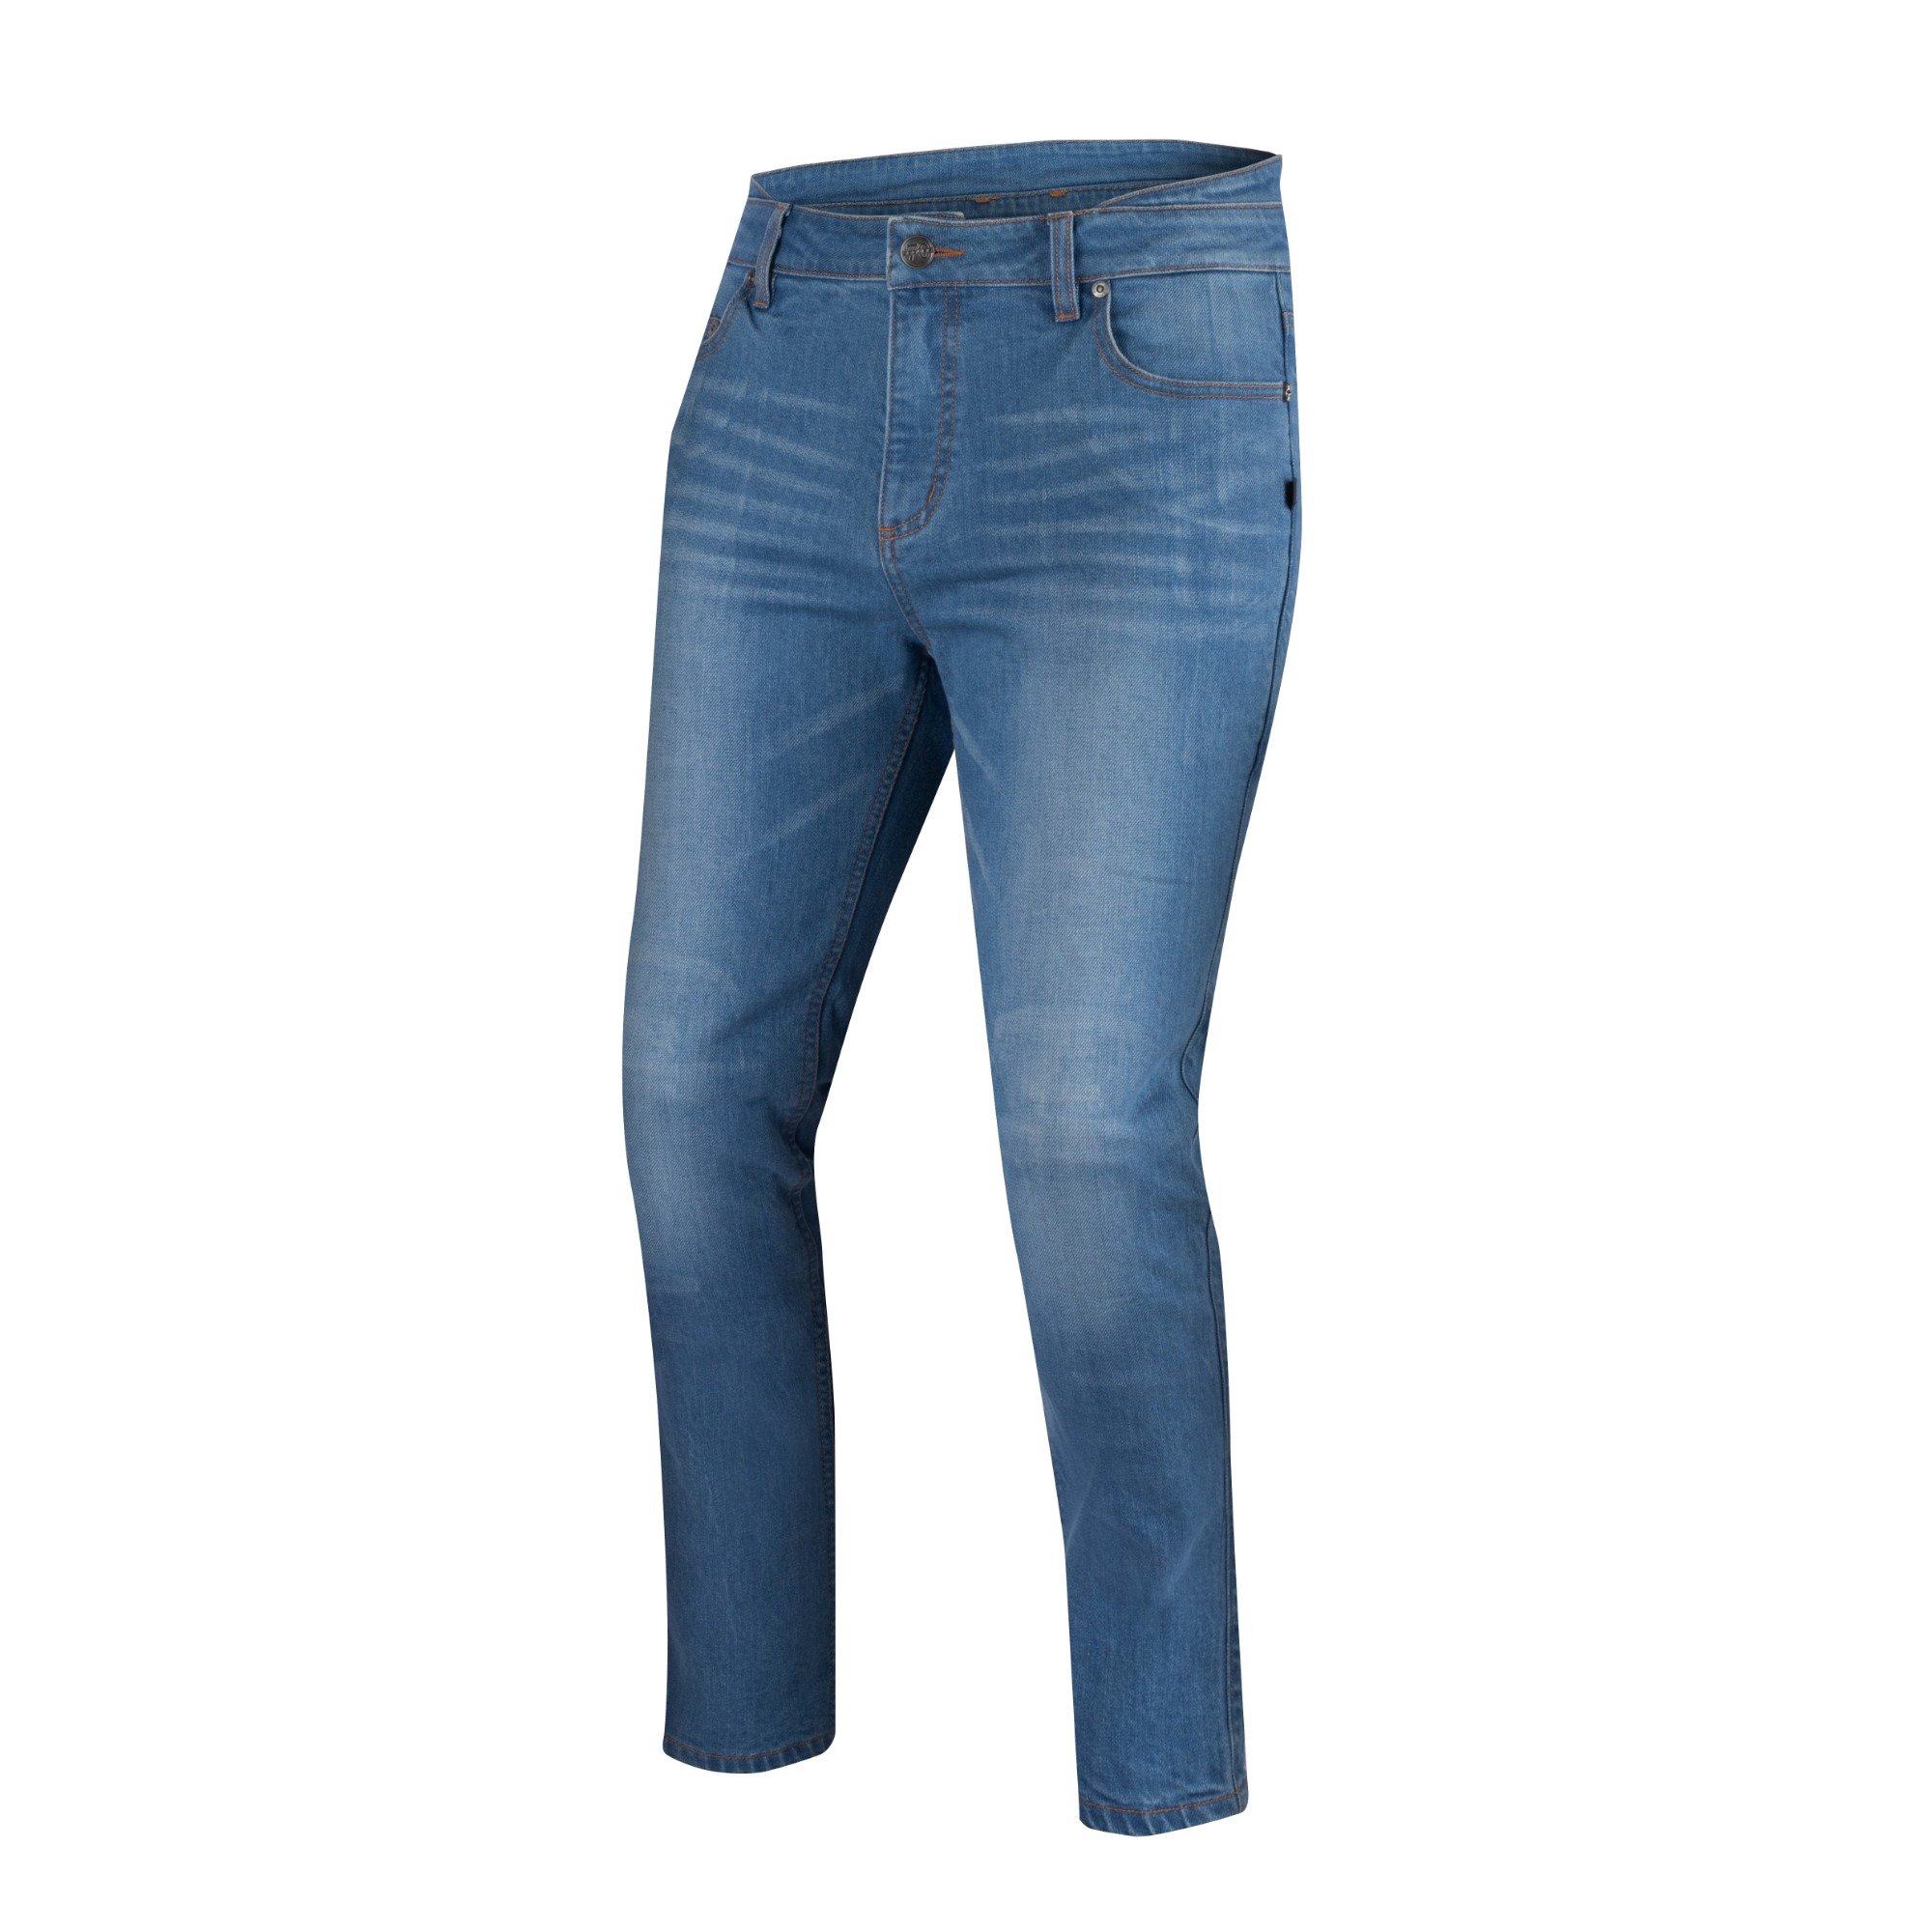 Image of Segura Trousers Rosco Blue Size 2XL ID 3660815168103